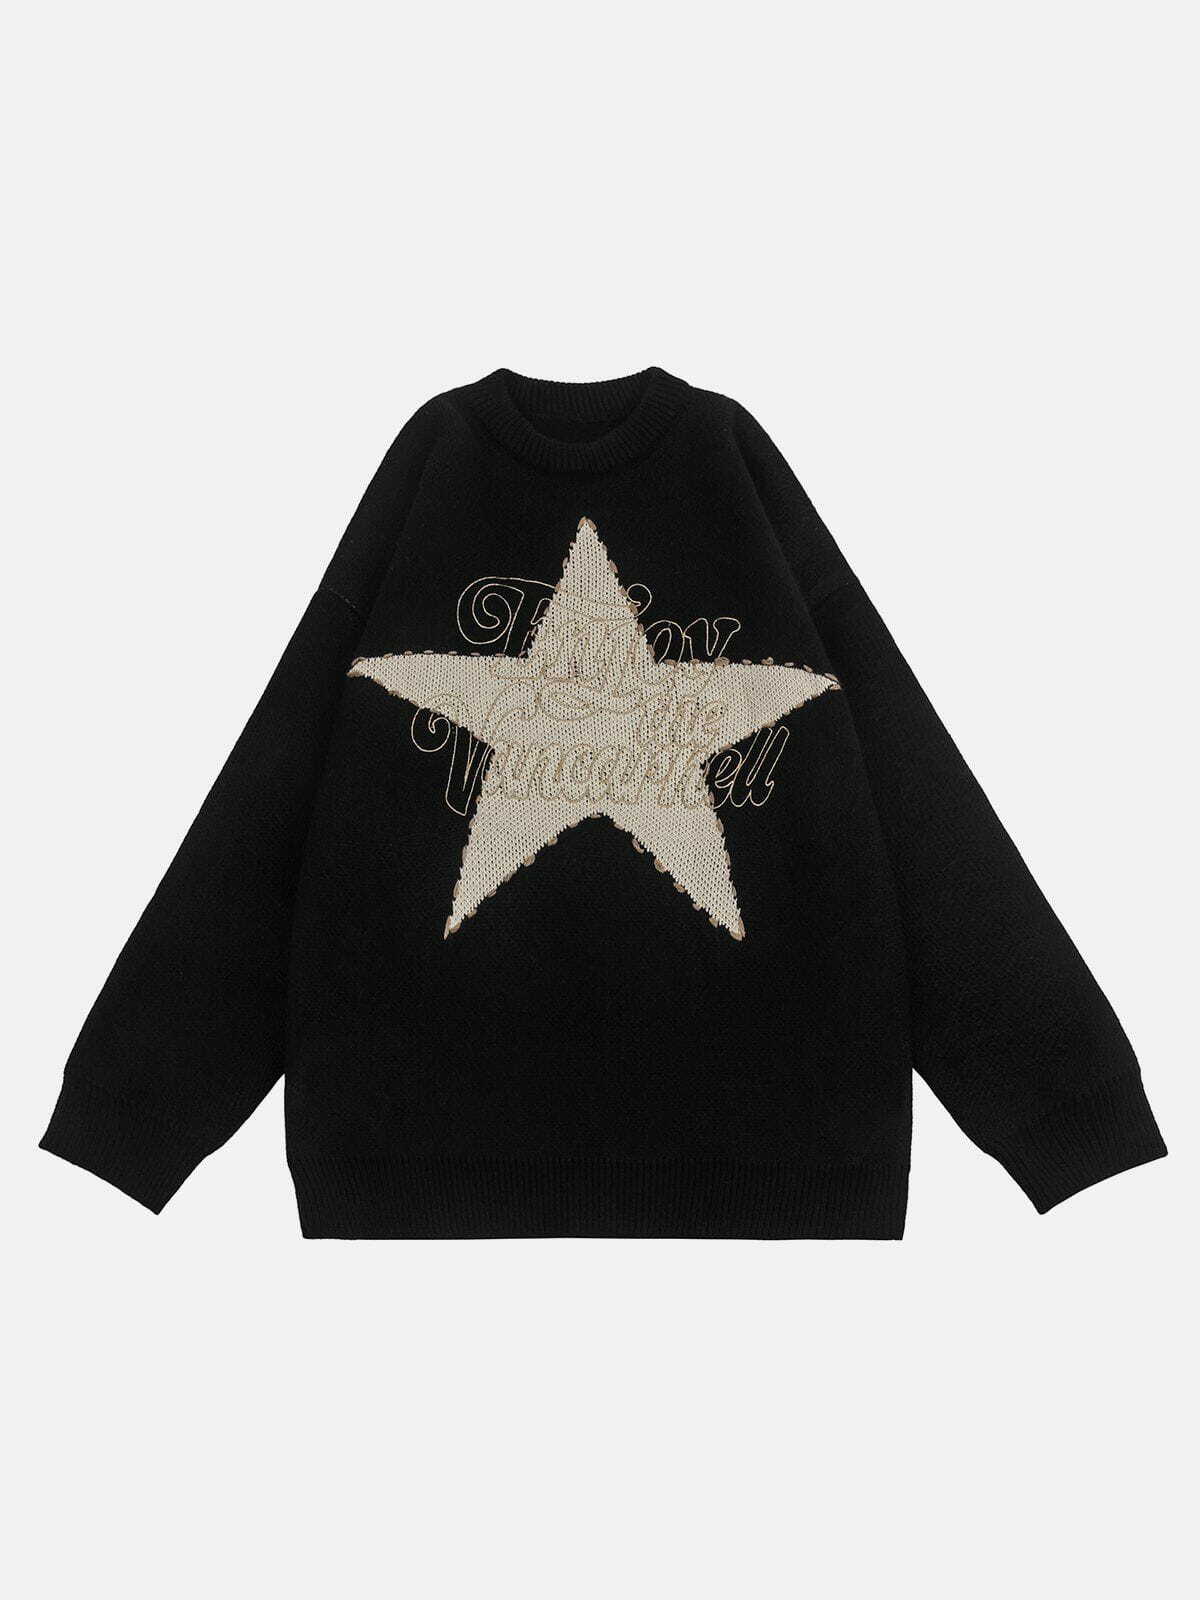 pentagram patchwork sweater edgy streetwear statement 1728